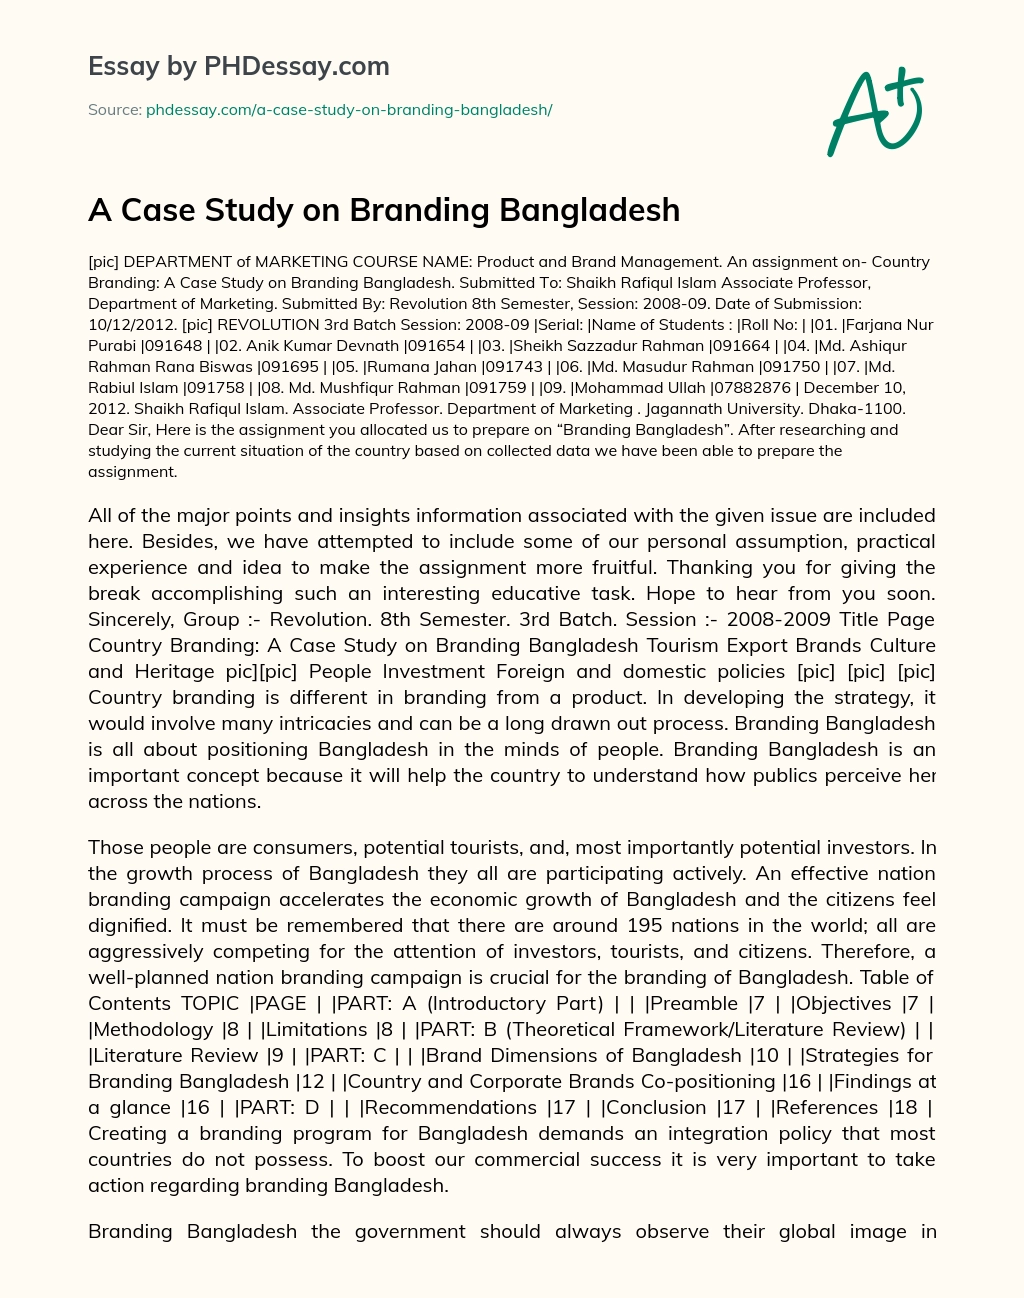 A Case Study on Branding Bangladesh essay